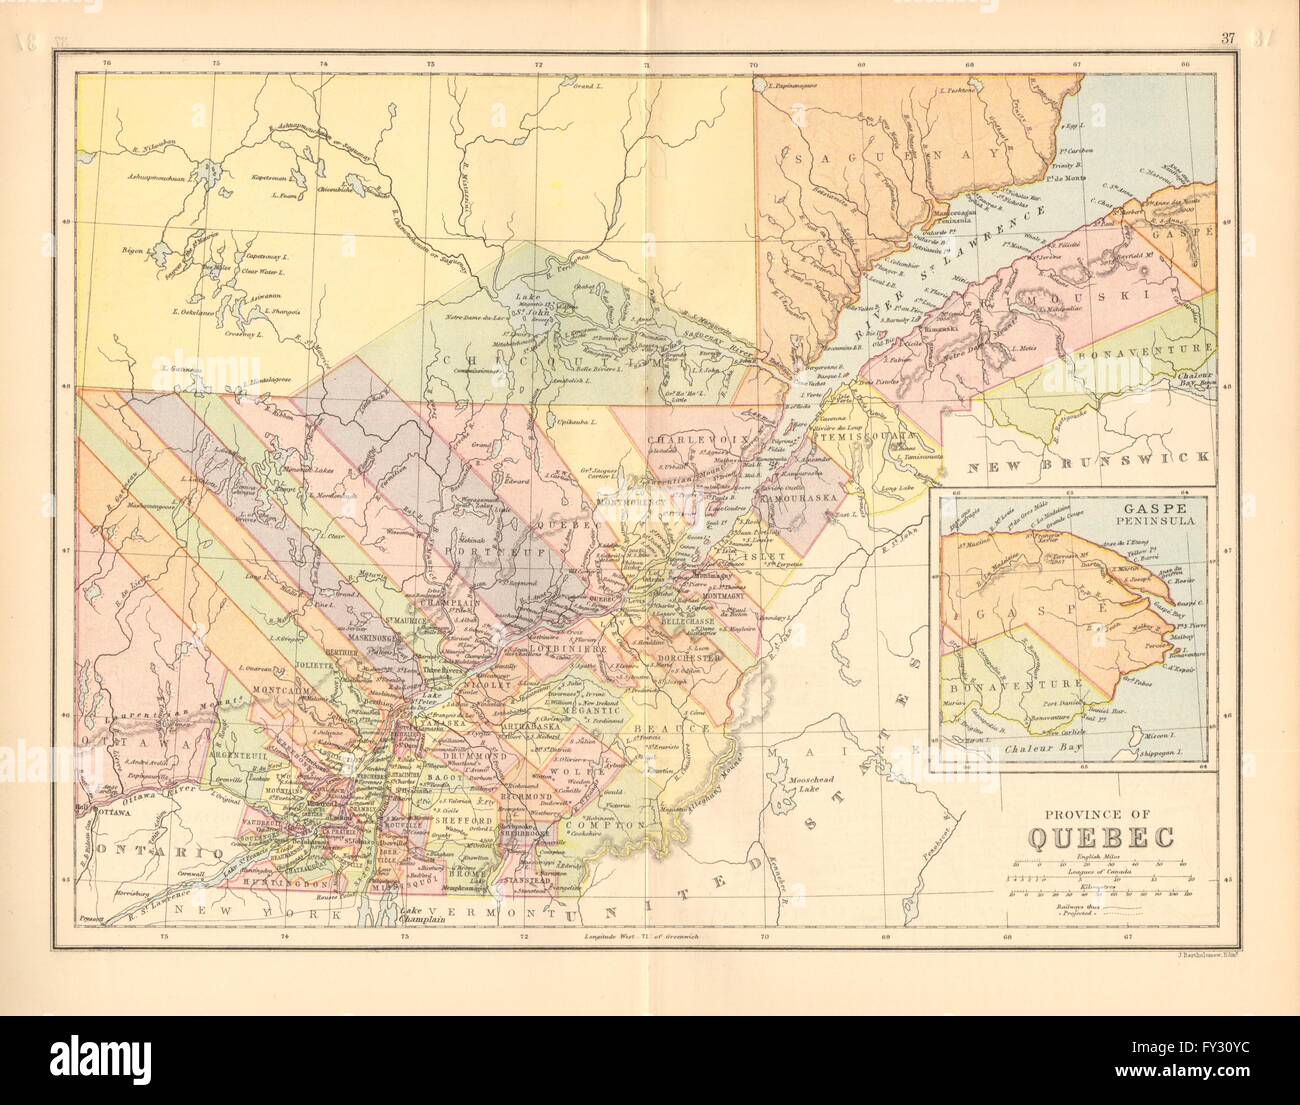 QUEBEC. St Lawrence. Counties. Railways. Canada. BARTHOLOMEW, 1876 antique map Stock Photo